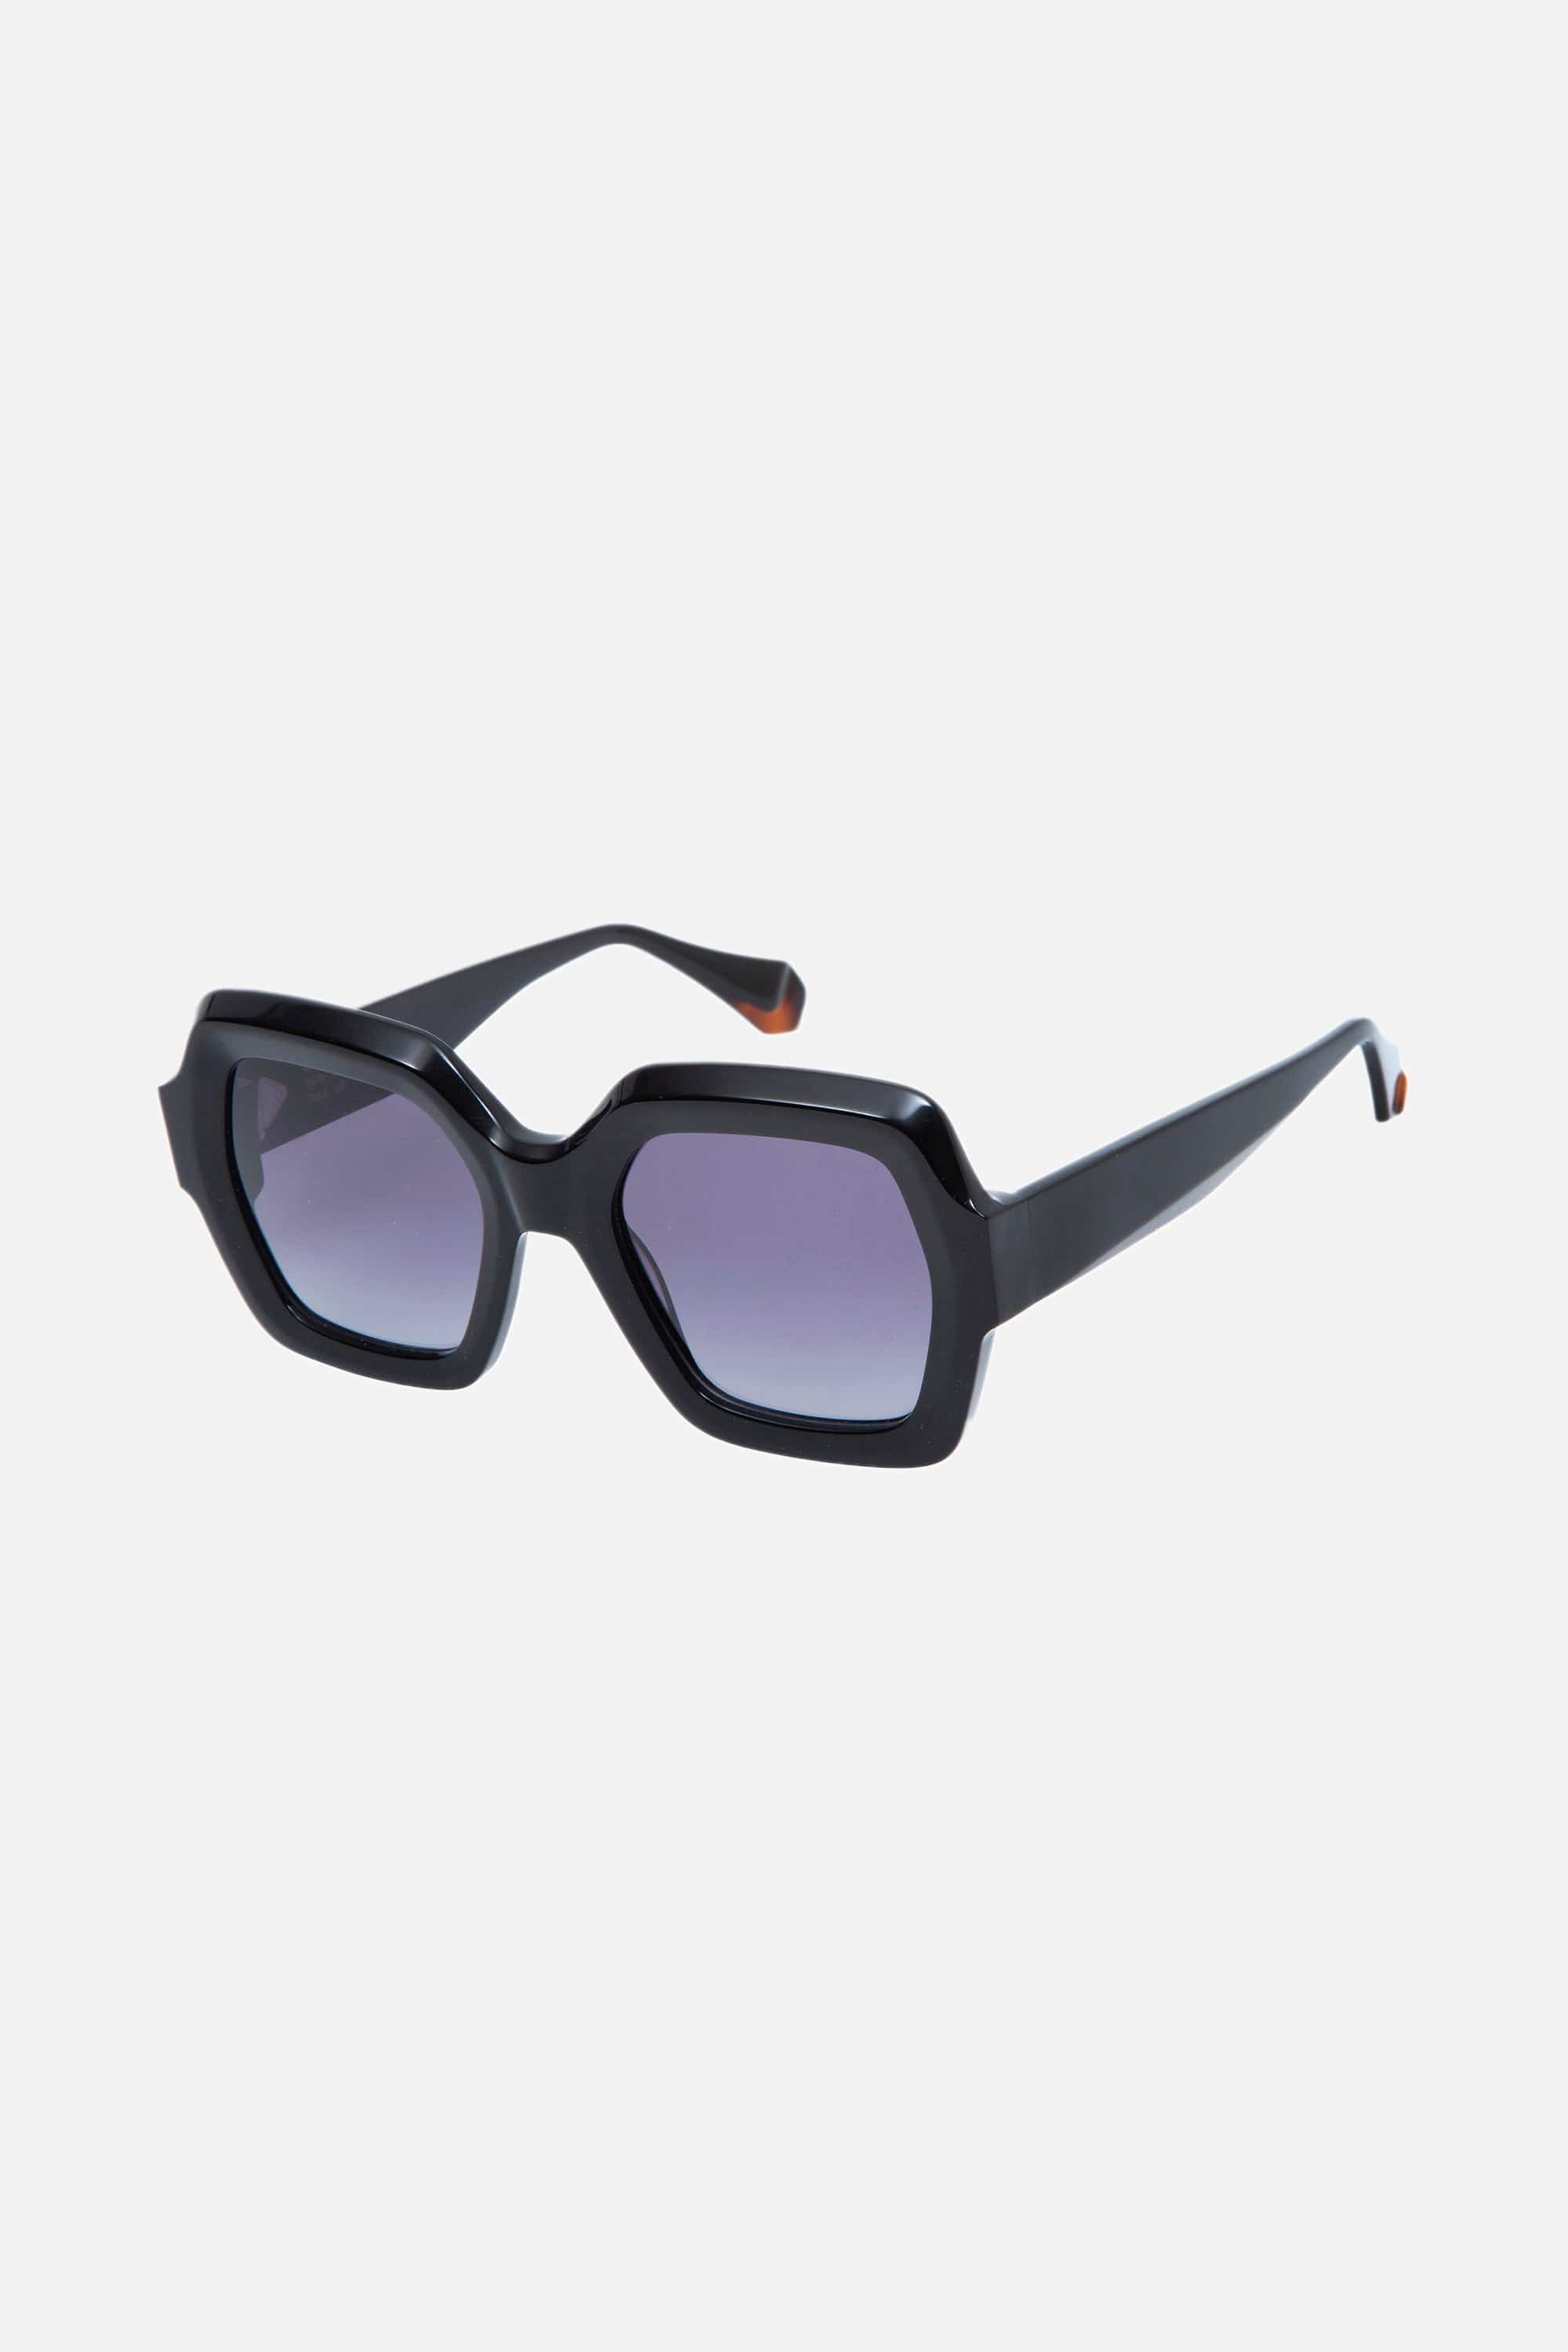 Gigi Studios hexagonal black sunglasses - Eyewear Club